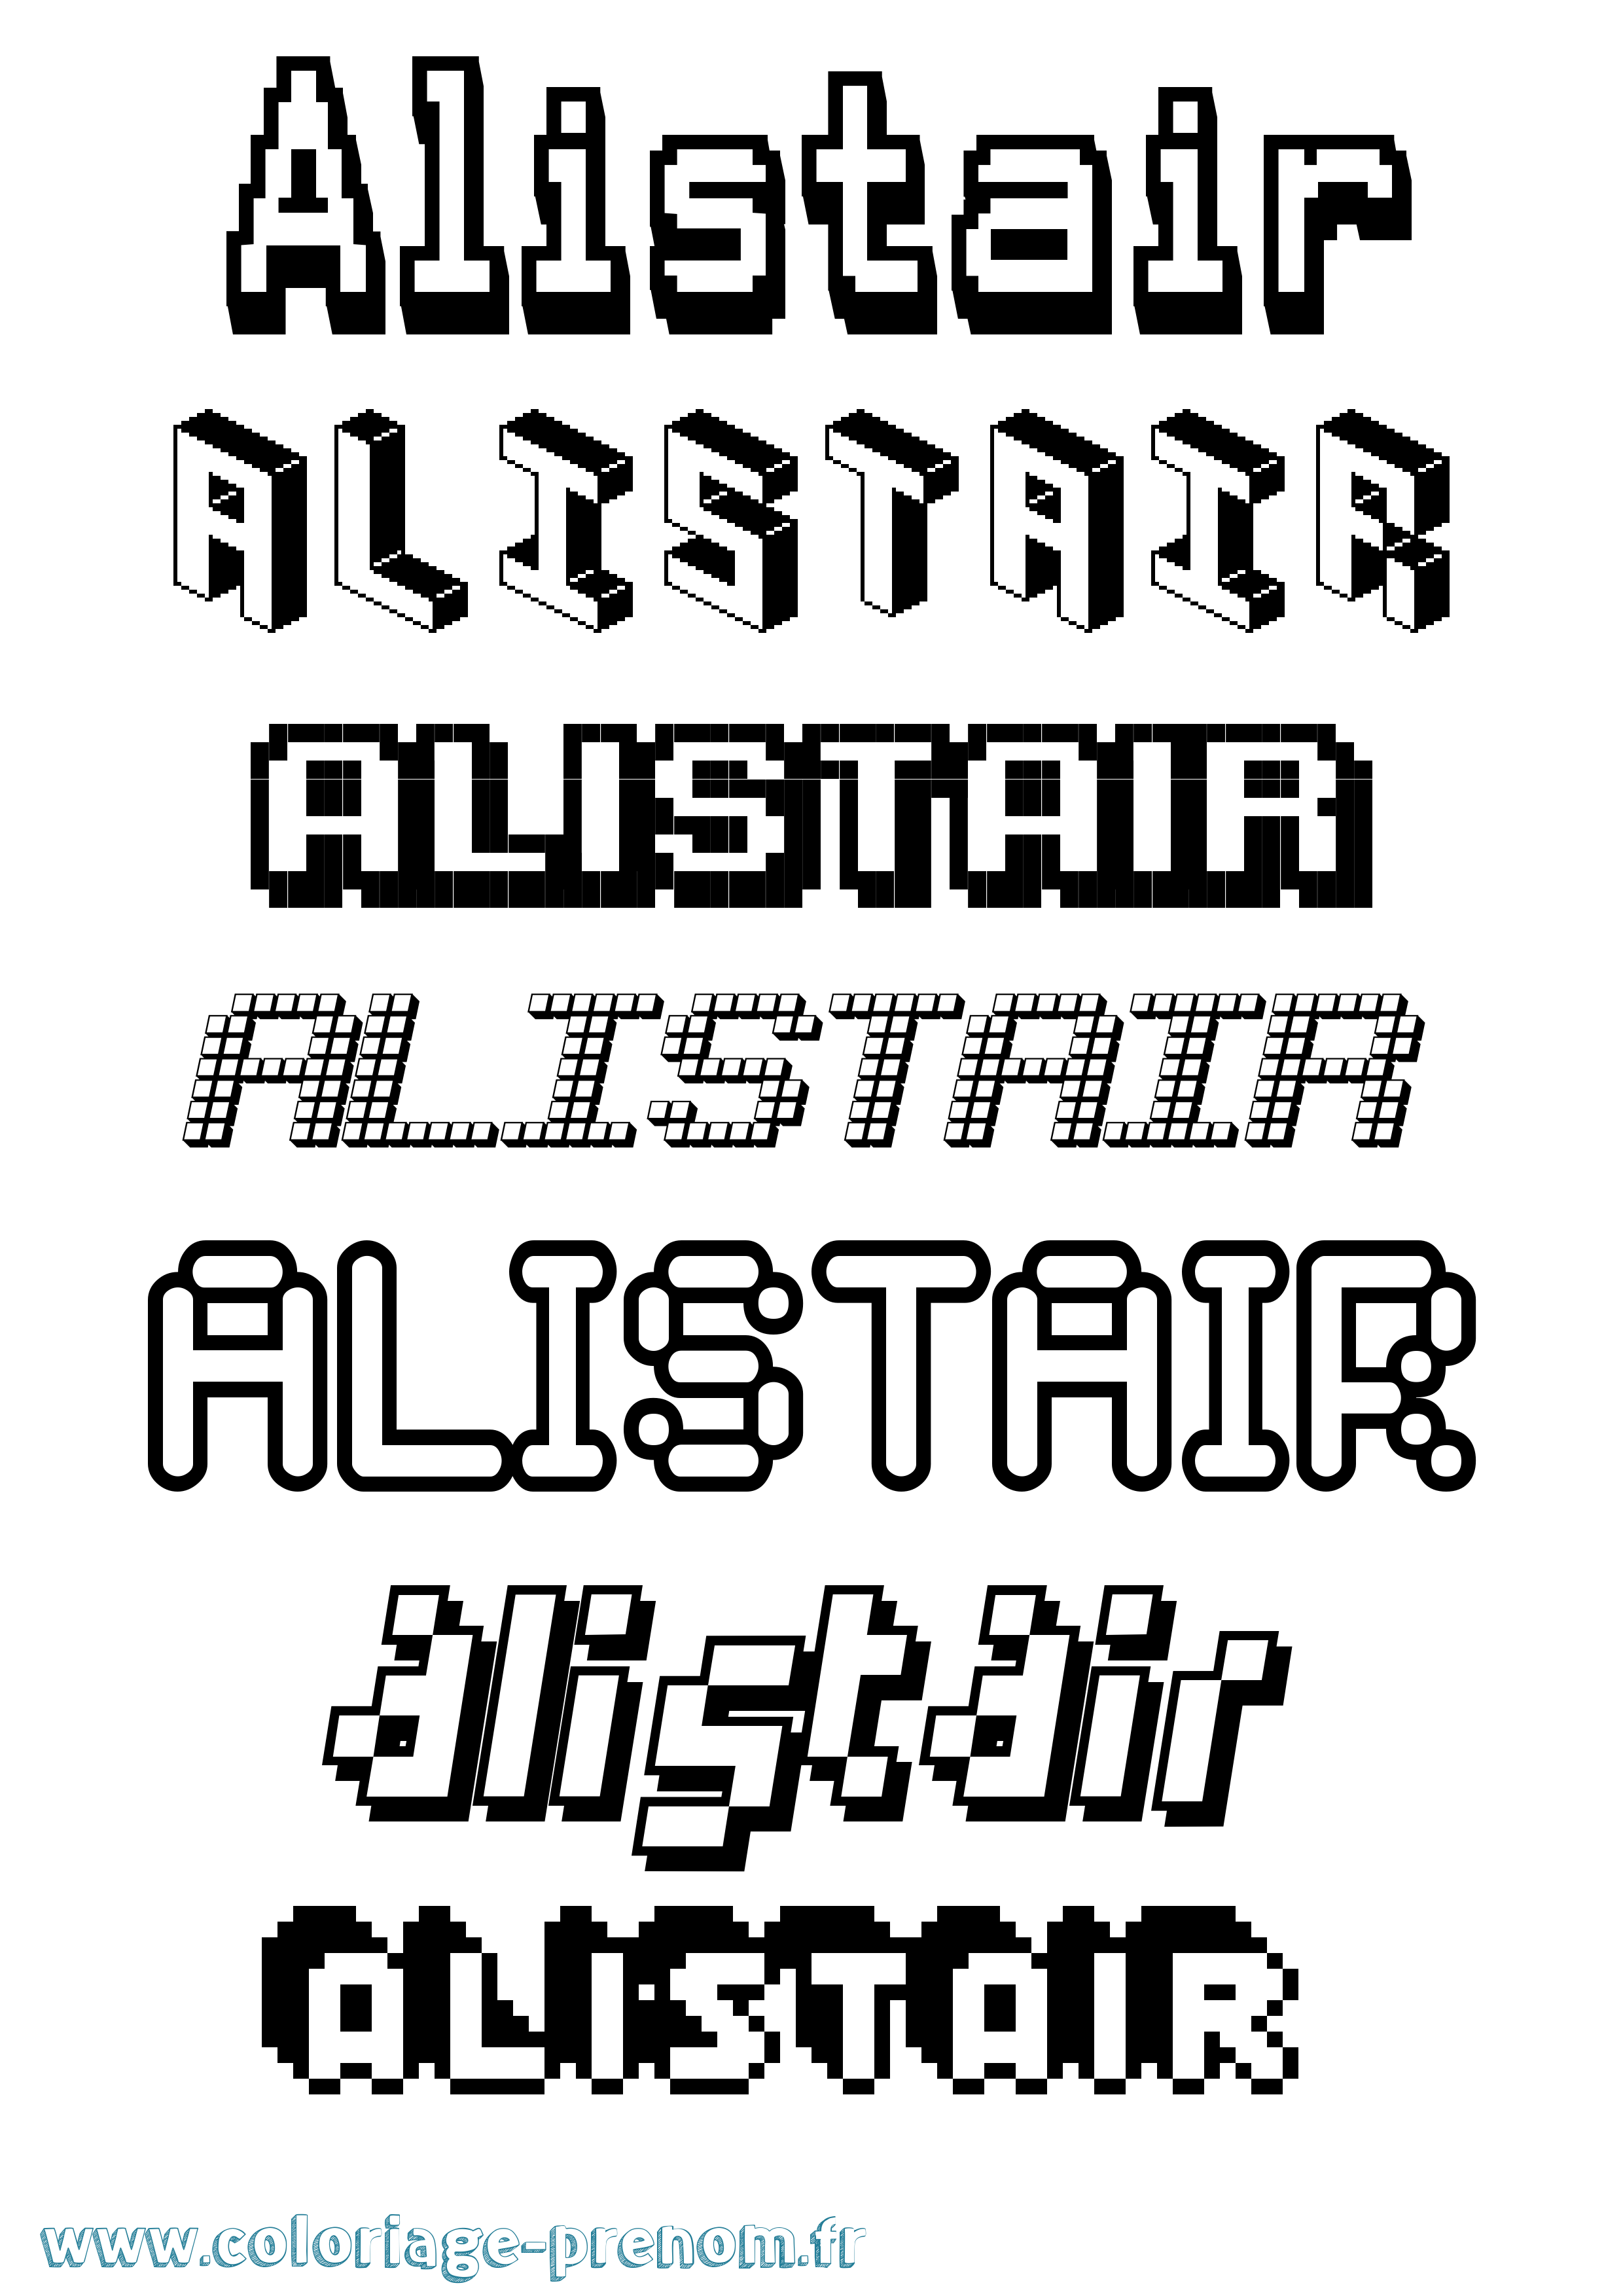 Coloriage prénom Alistair Pixel